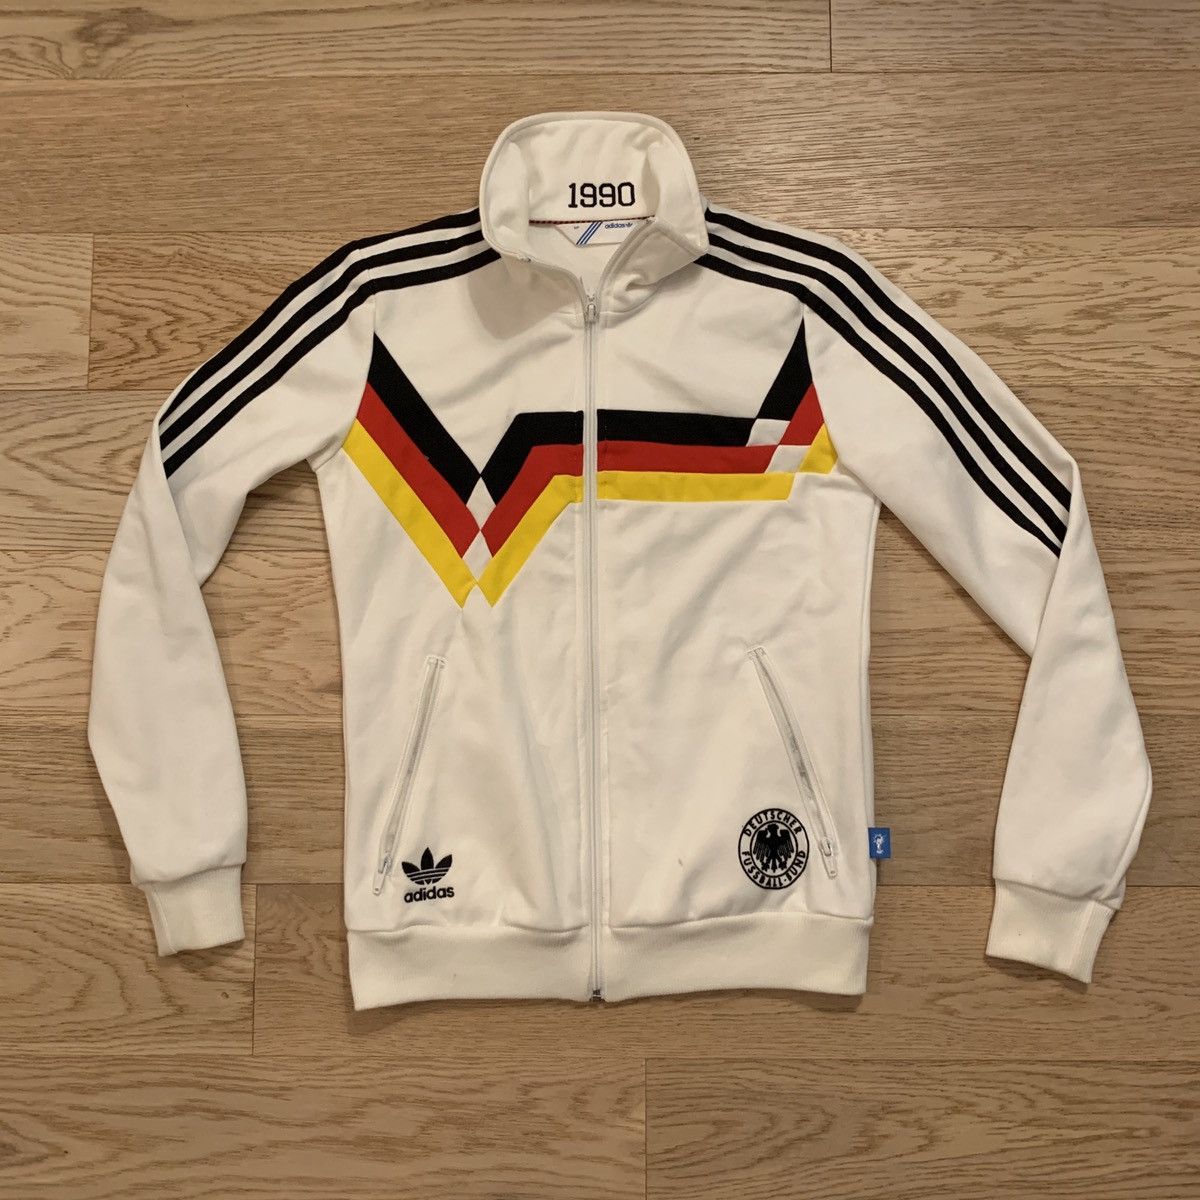 Adidas ADIDAS 1990 WEST GERMANY WORLD CUP TRACK JACKET Size US S / EU 44-46 / 1 - 7 Thumbnail